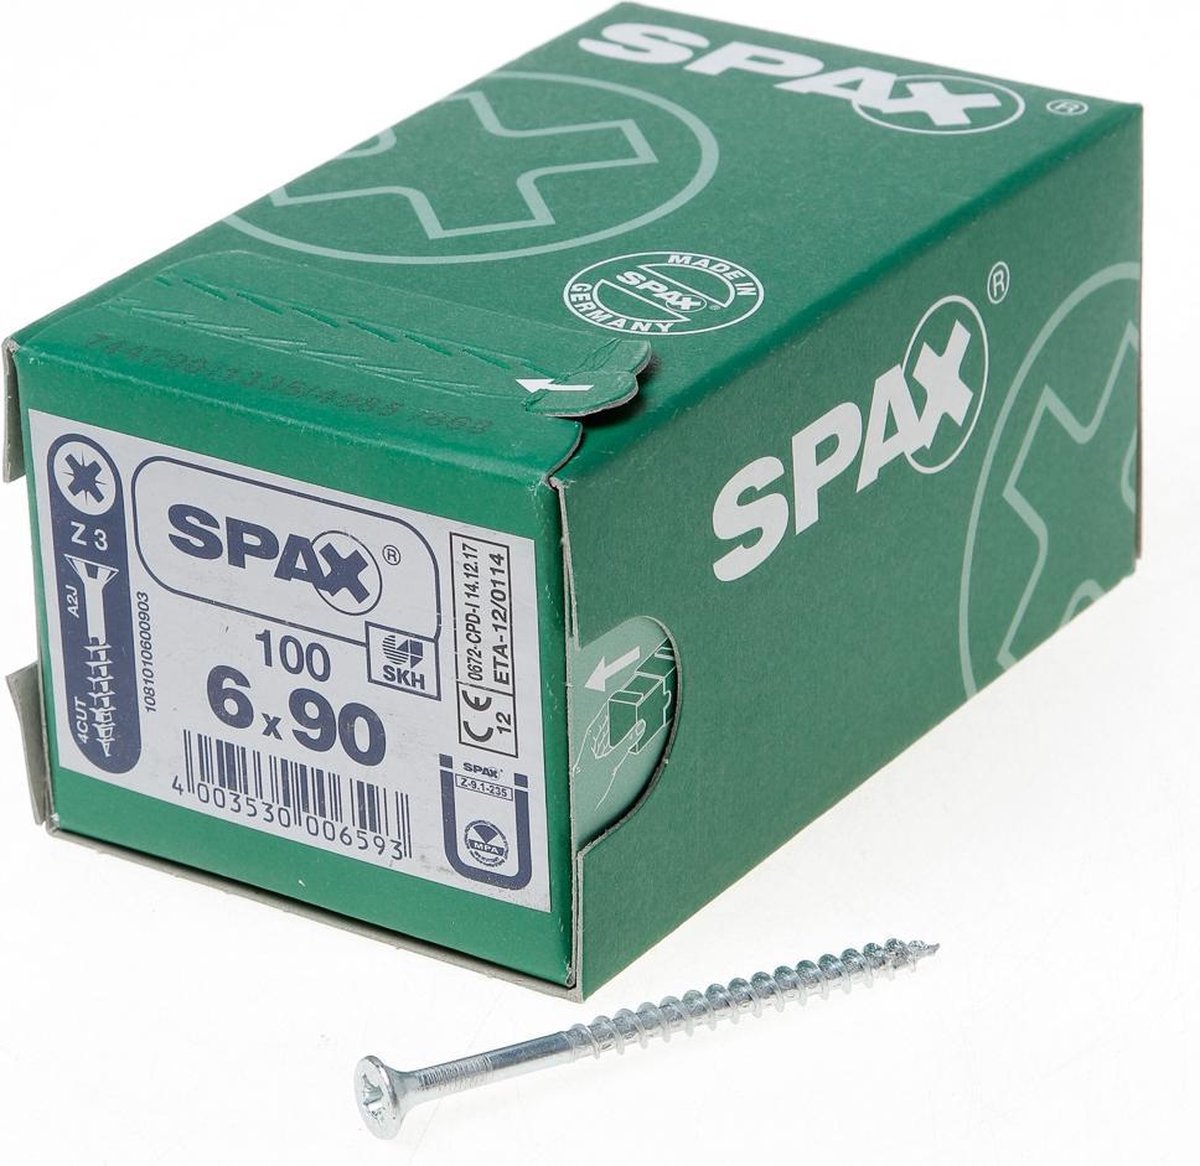 Spax Spaanplaatschroef Verzinkt PK 6.0 x 90 - 100 stuks - Spax